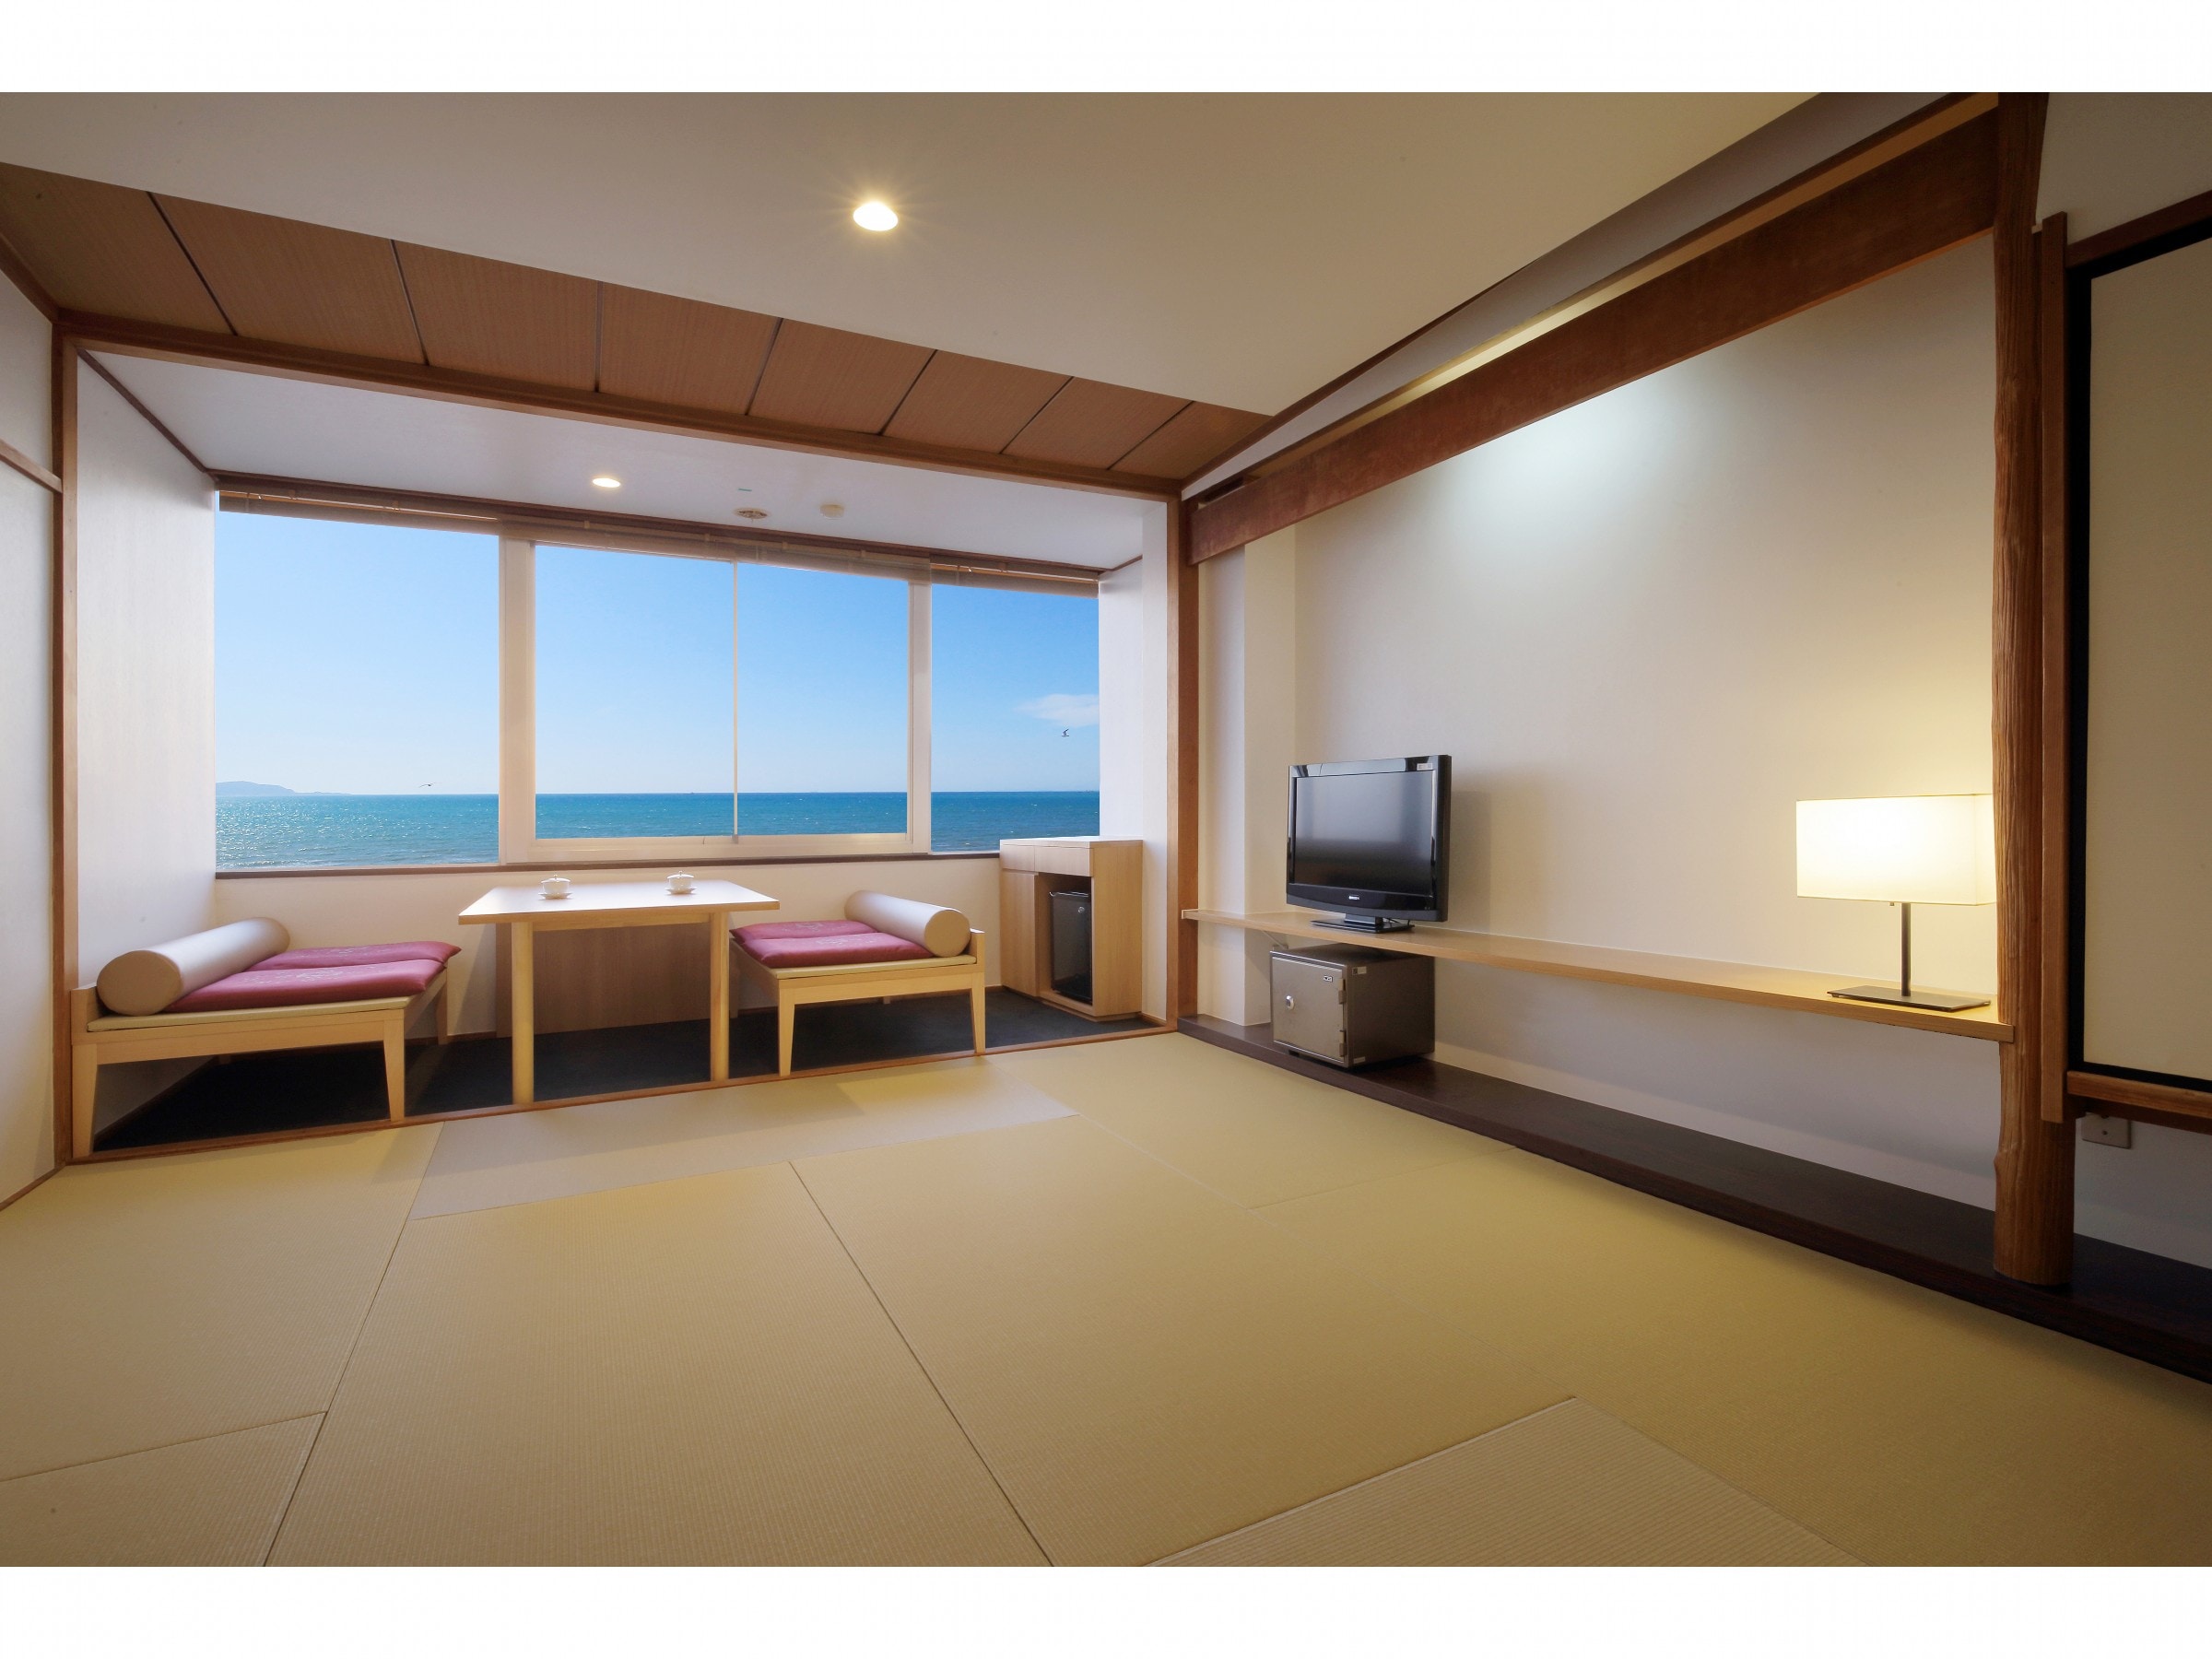 Kamar bergaya Jepang dengan pemandangan laut